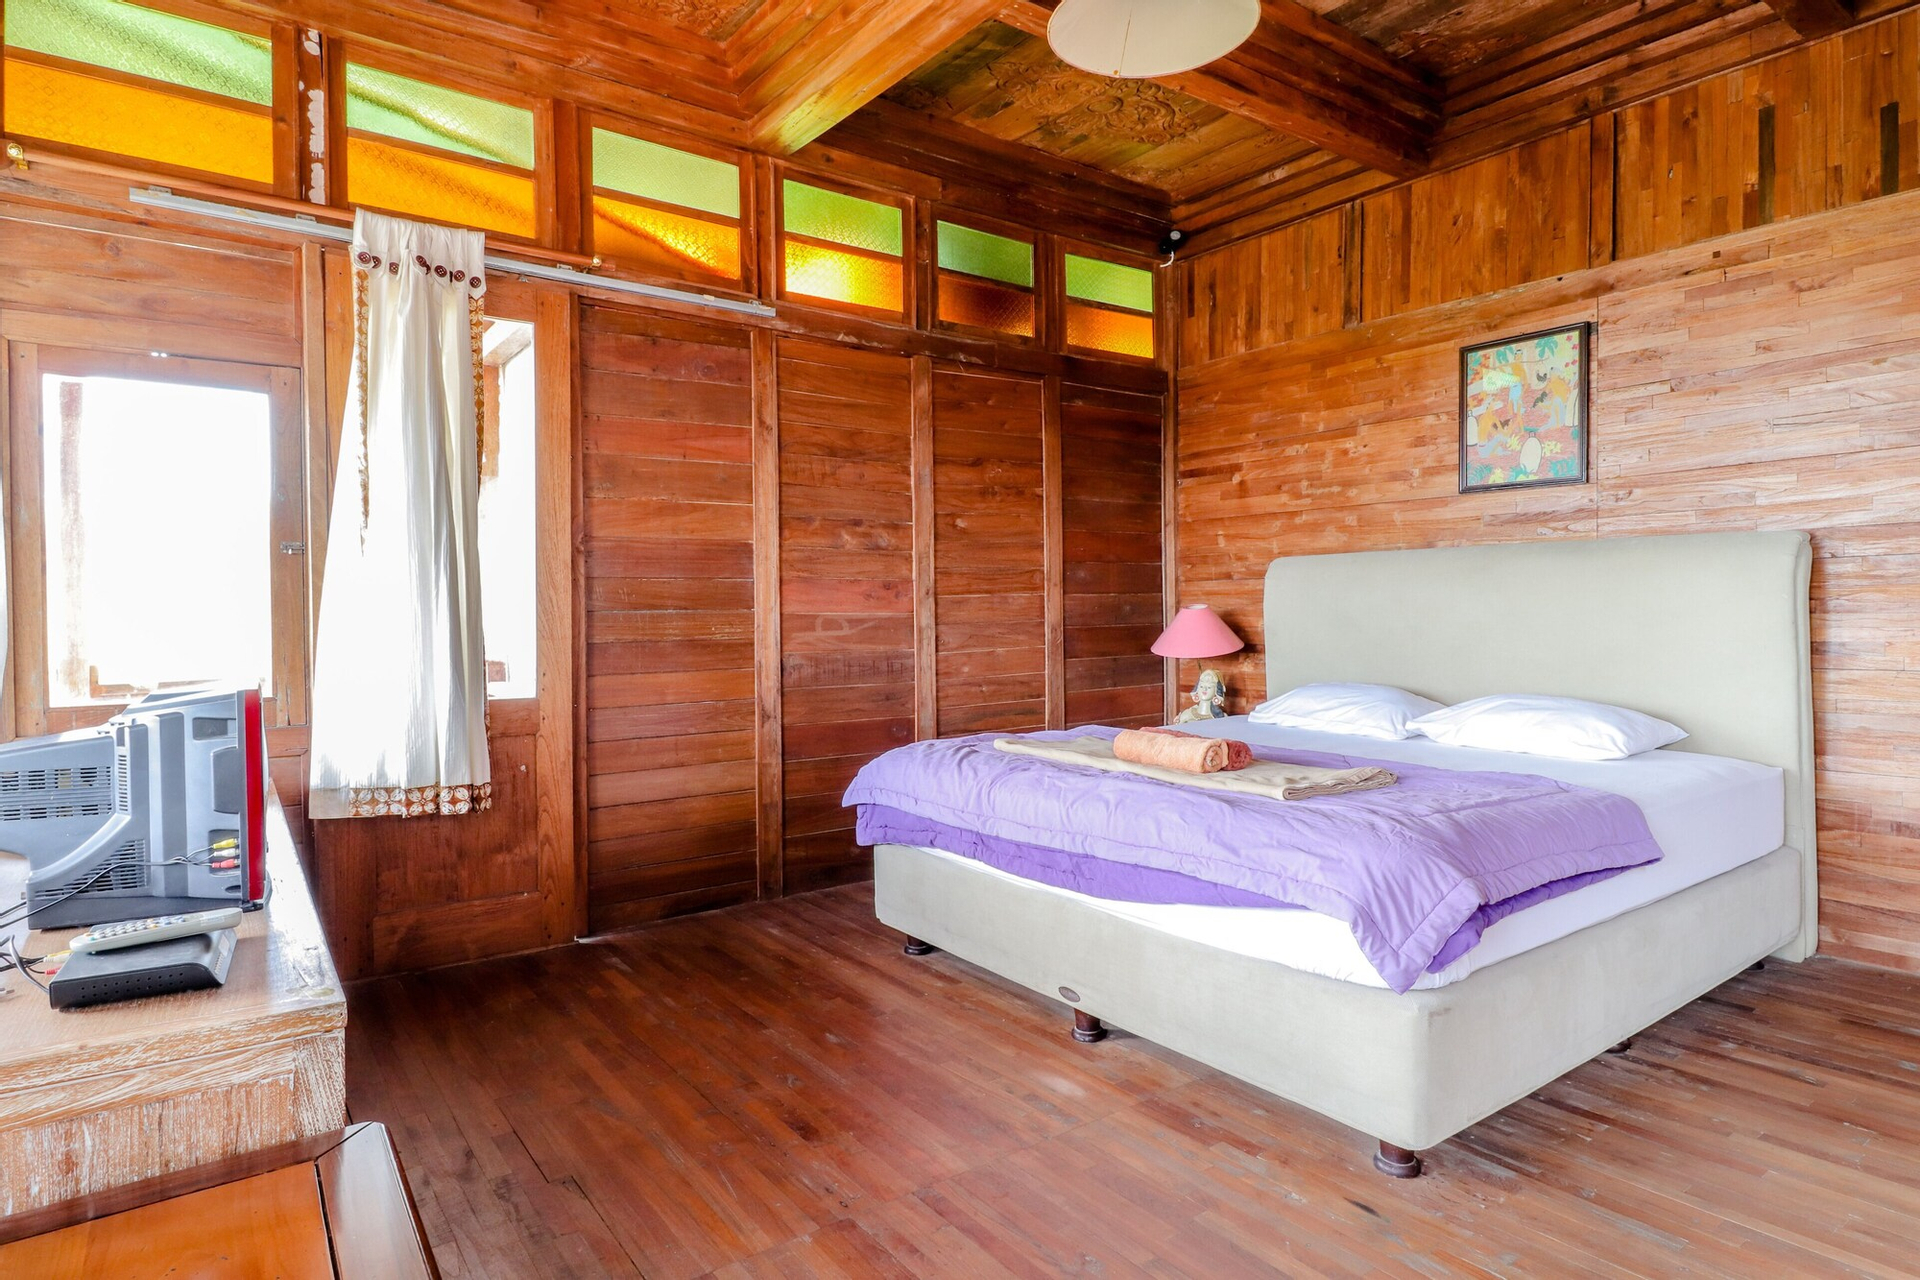 Bedroom 4, Adinda Beach Hotel and Villa, Bantul